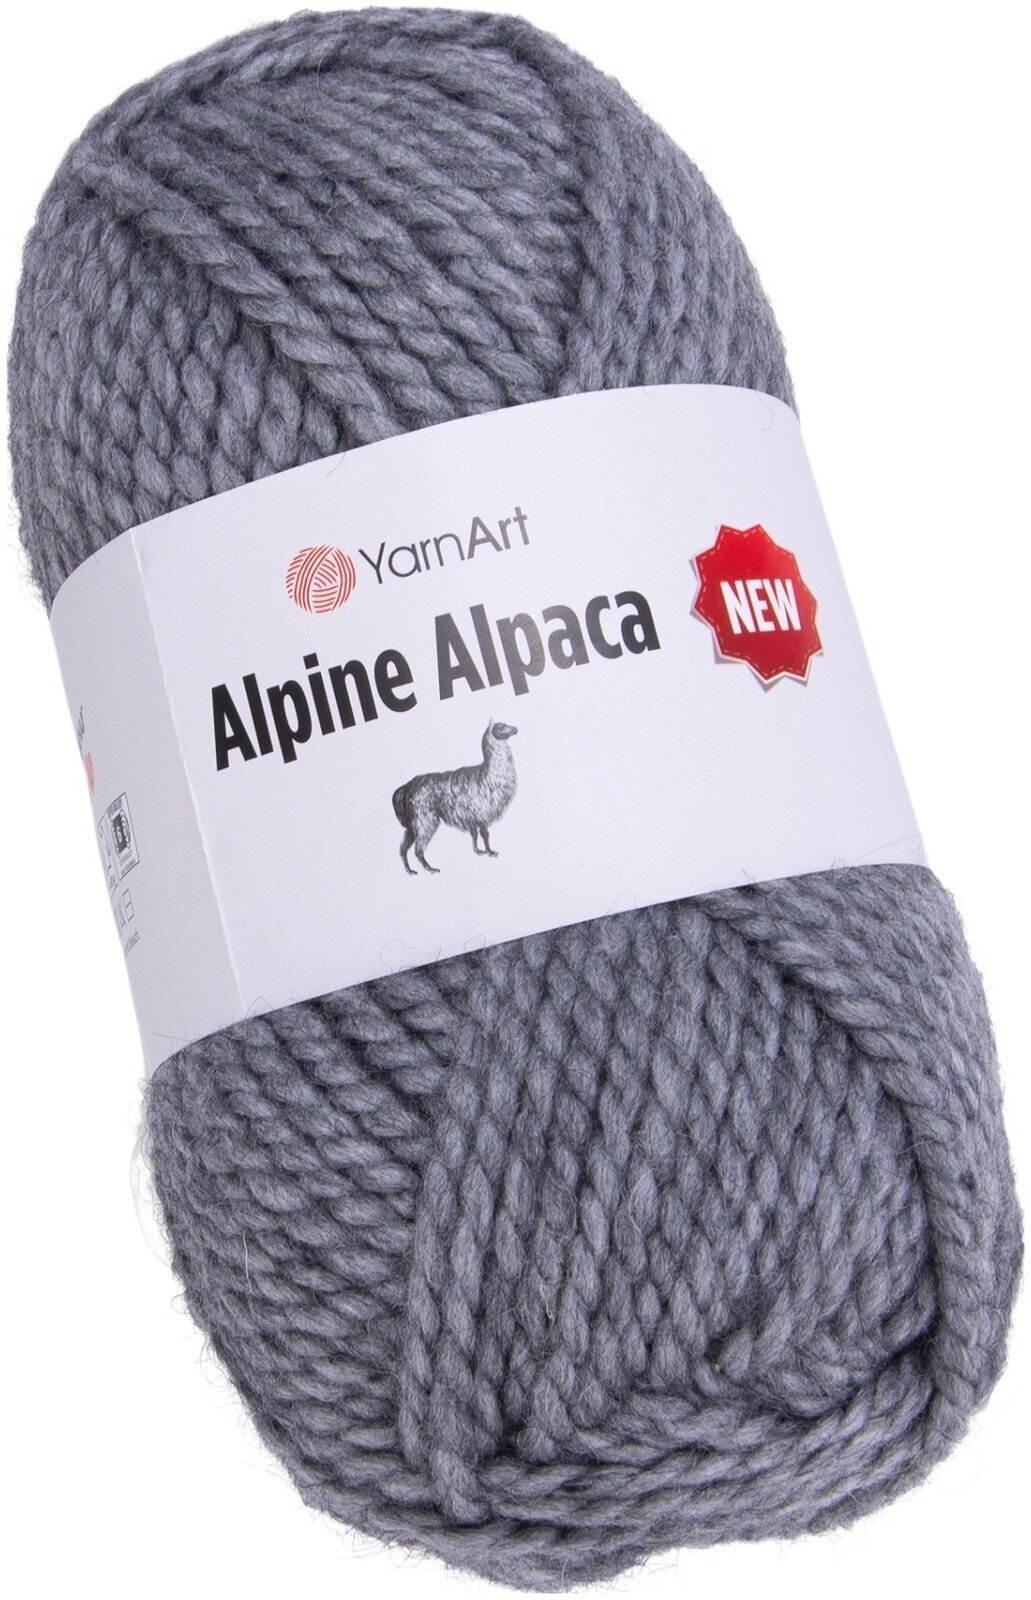 Strickgarn Yarn Art Alpine Alpaca 1447